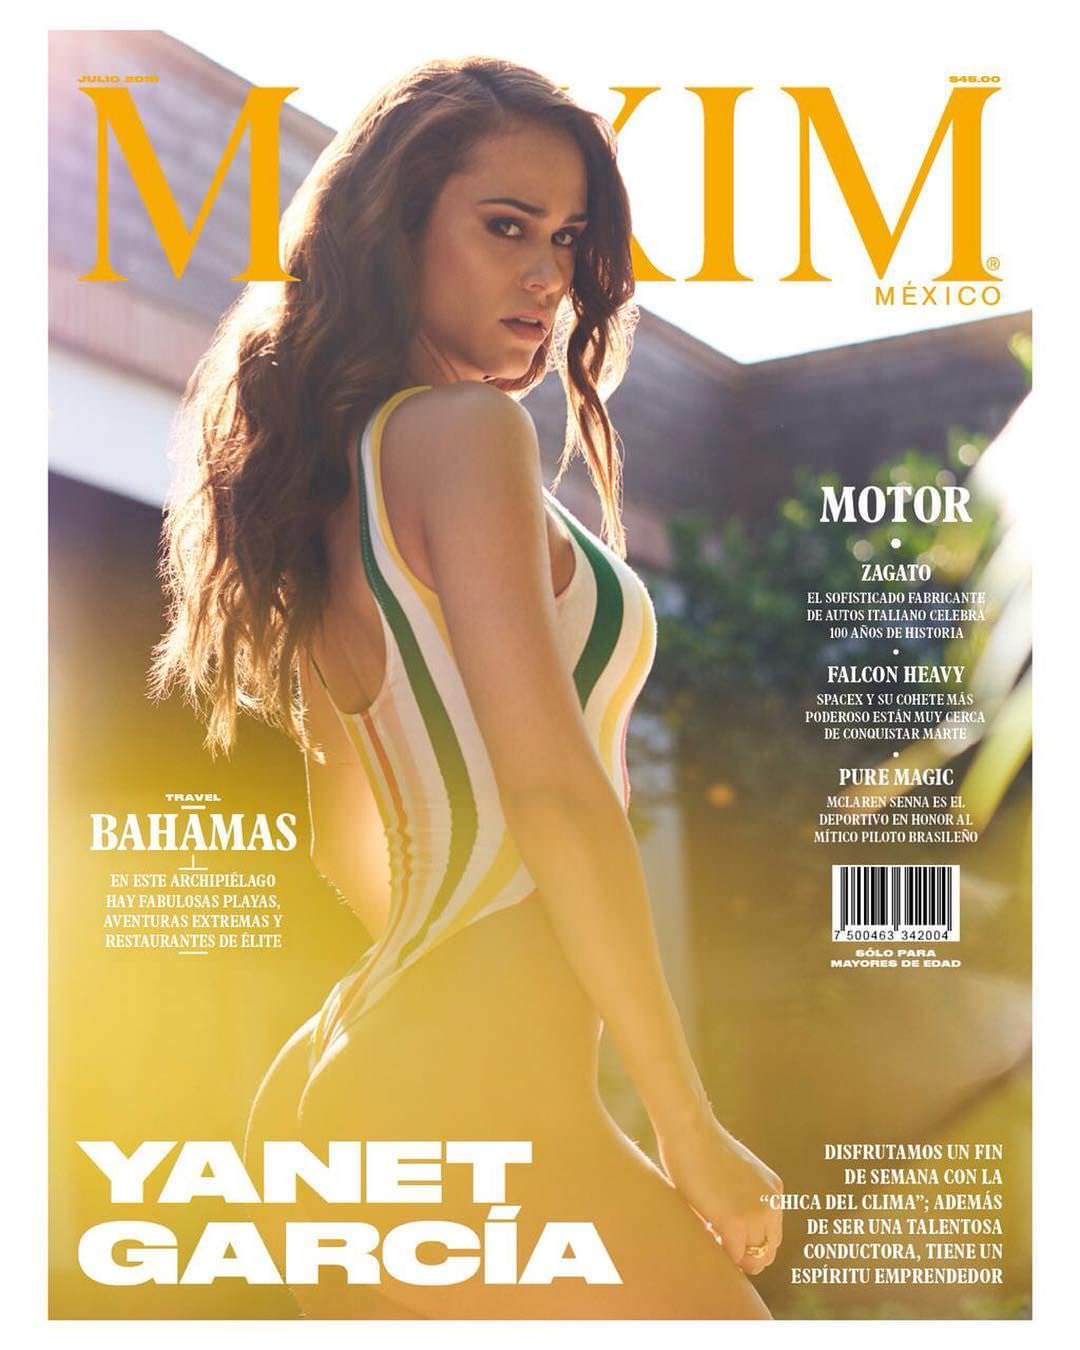 Янет Гарсия фото для обложки журнала Maxim